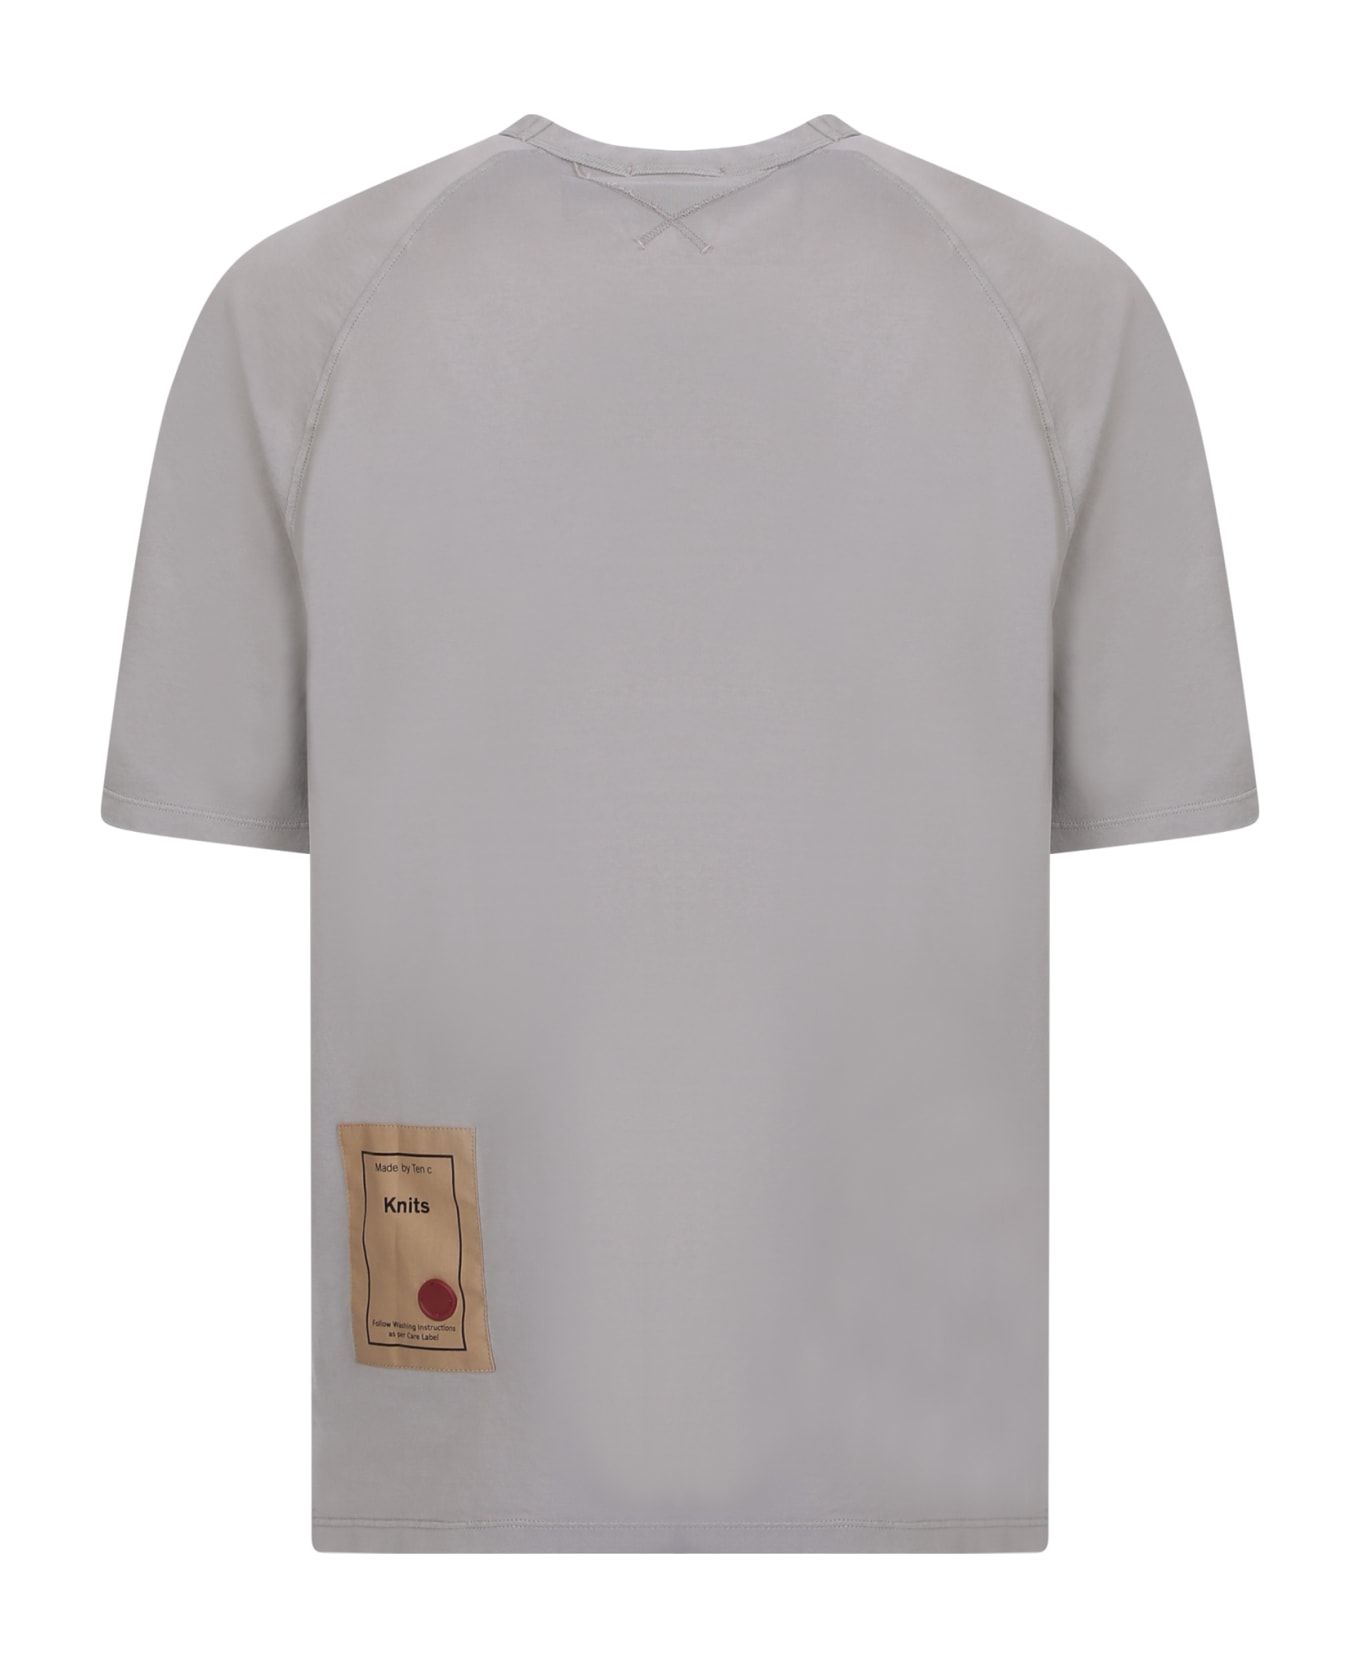 Ten C Chest Patch Pocket Grey T-shirt - Grey シャツ